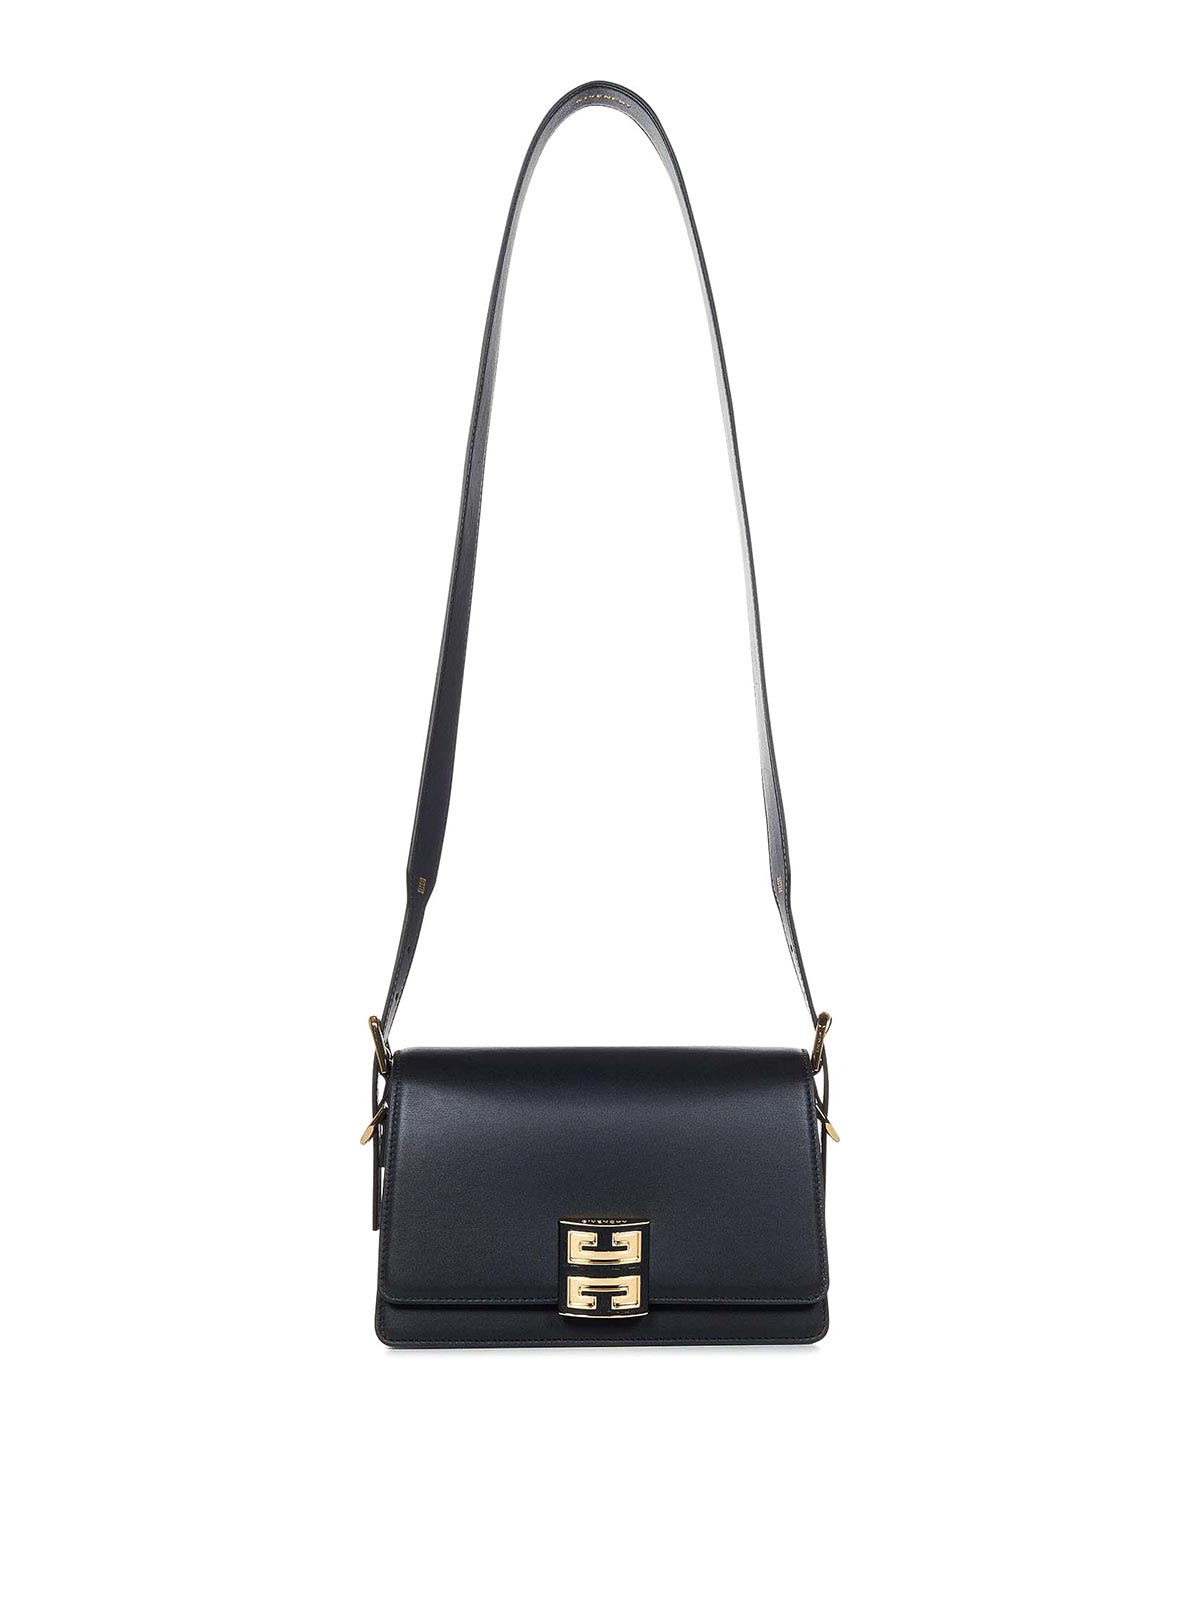 Givenchy Black Box Leather Crossbody Bag